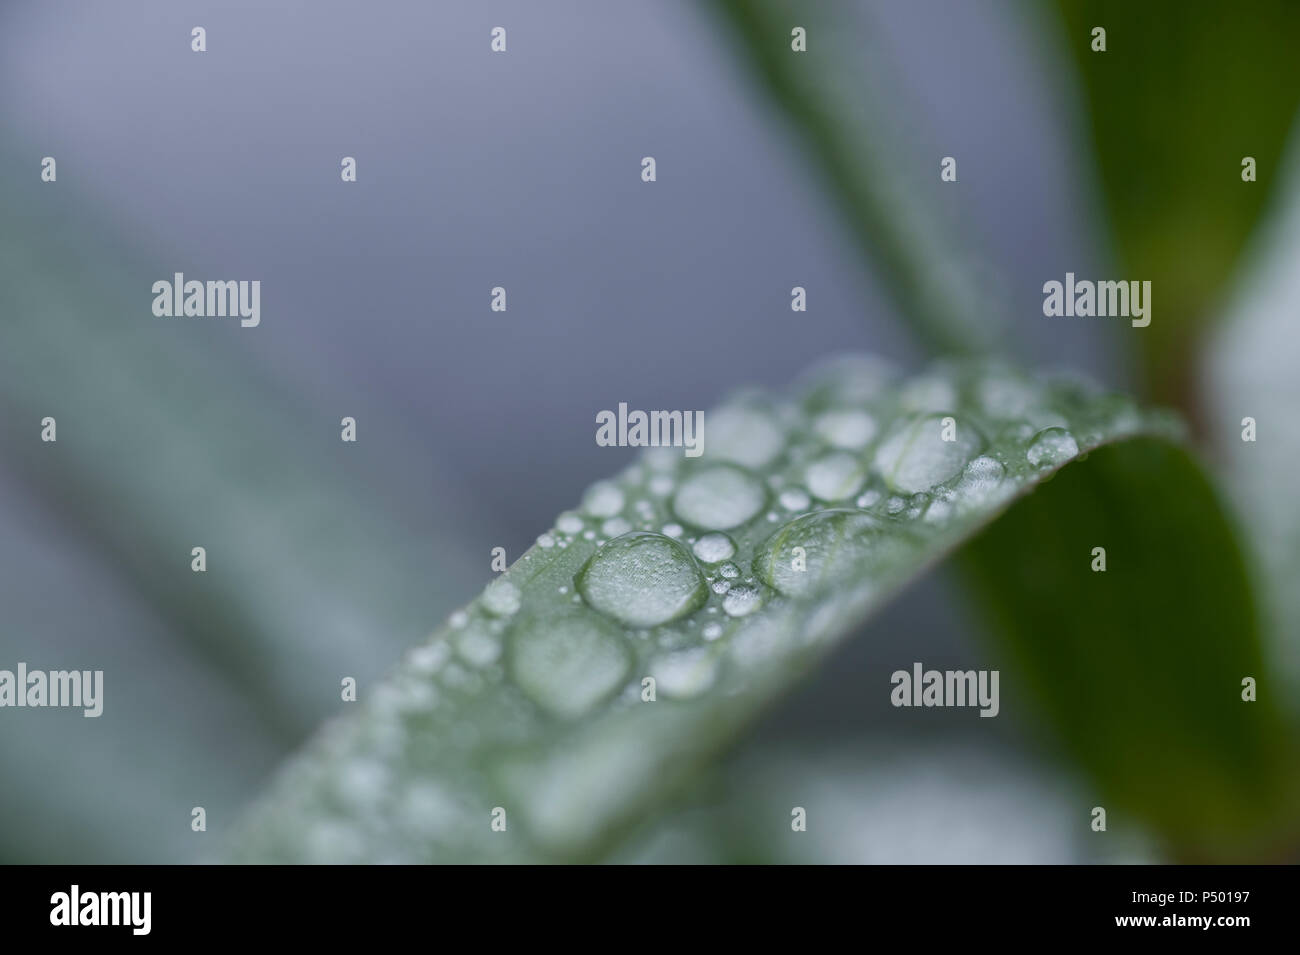 Raindrops on leaf, close-up Stock Photo